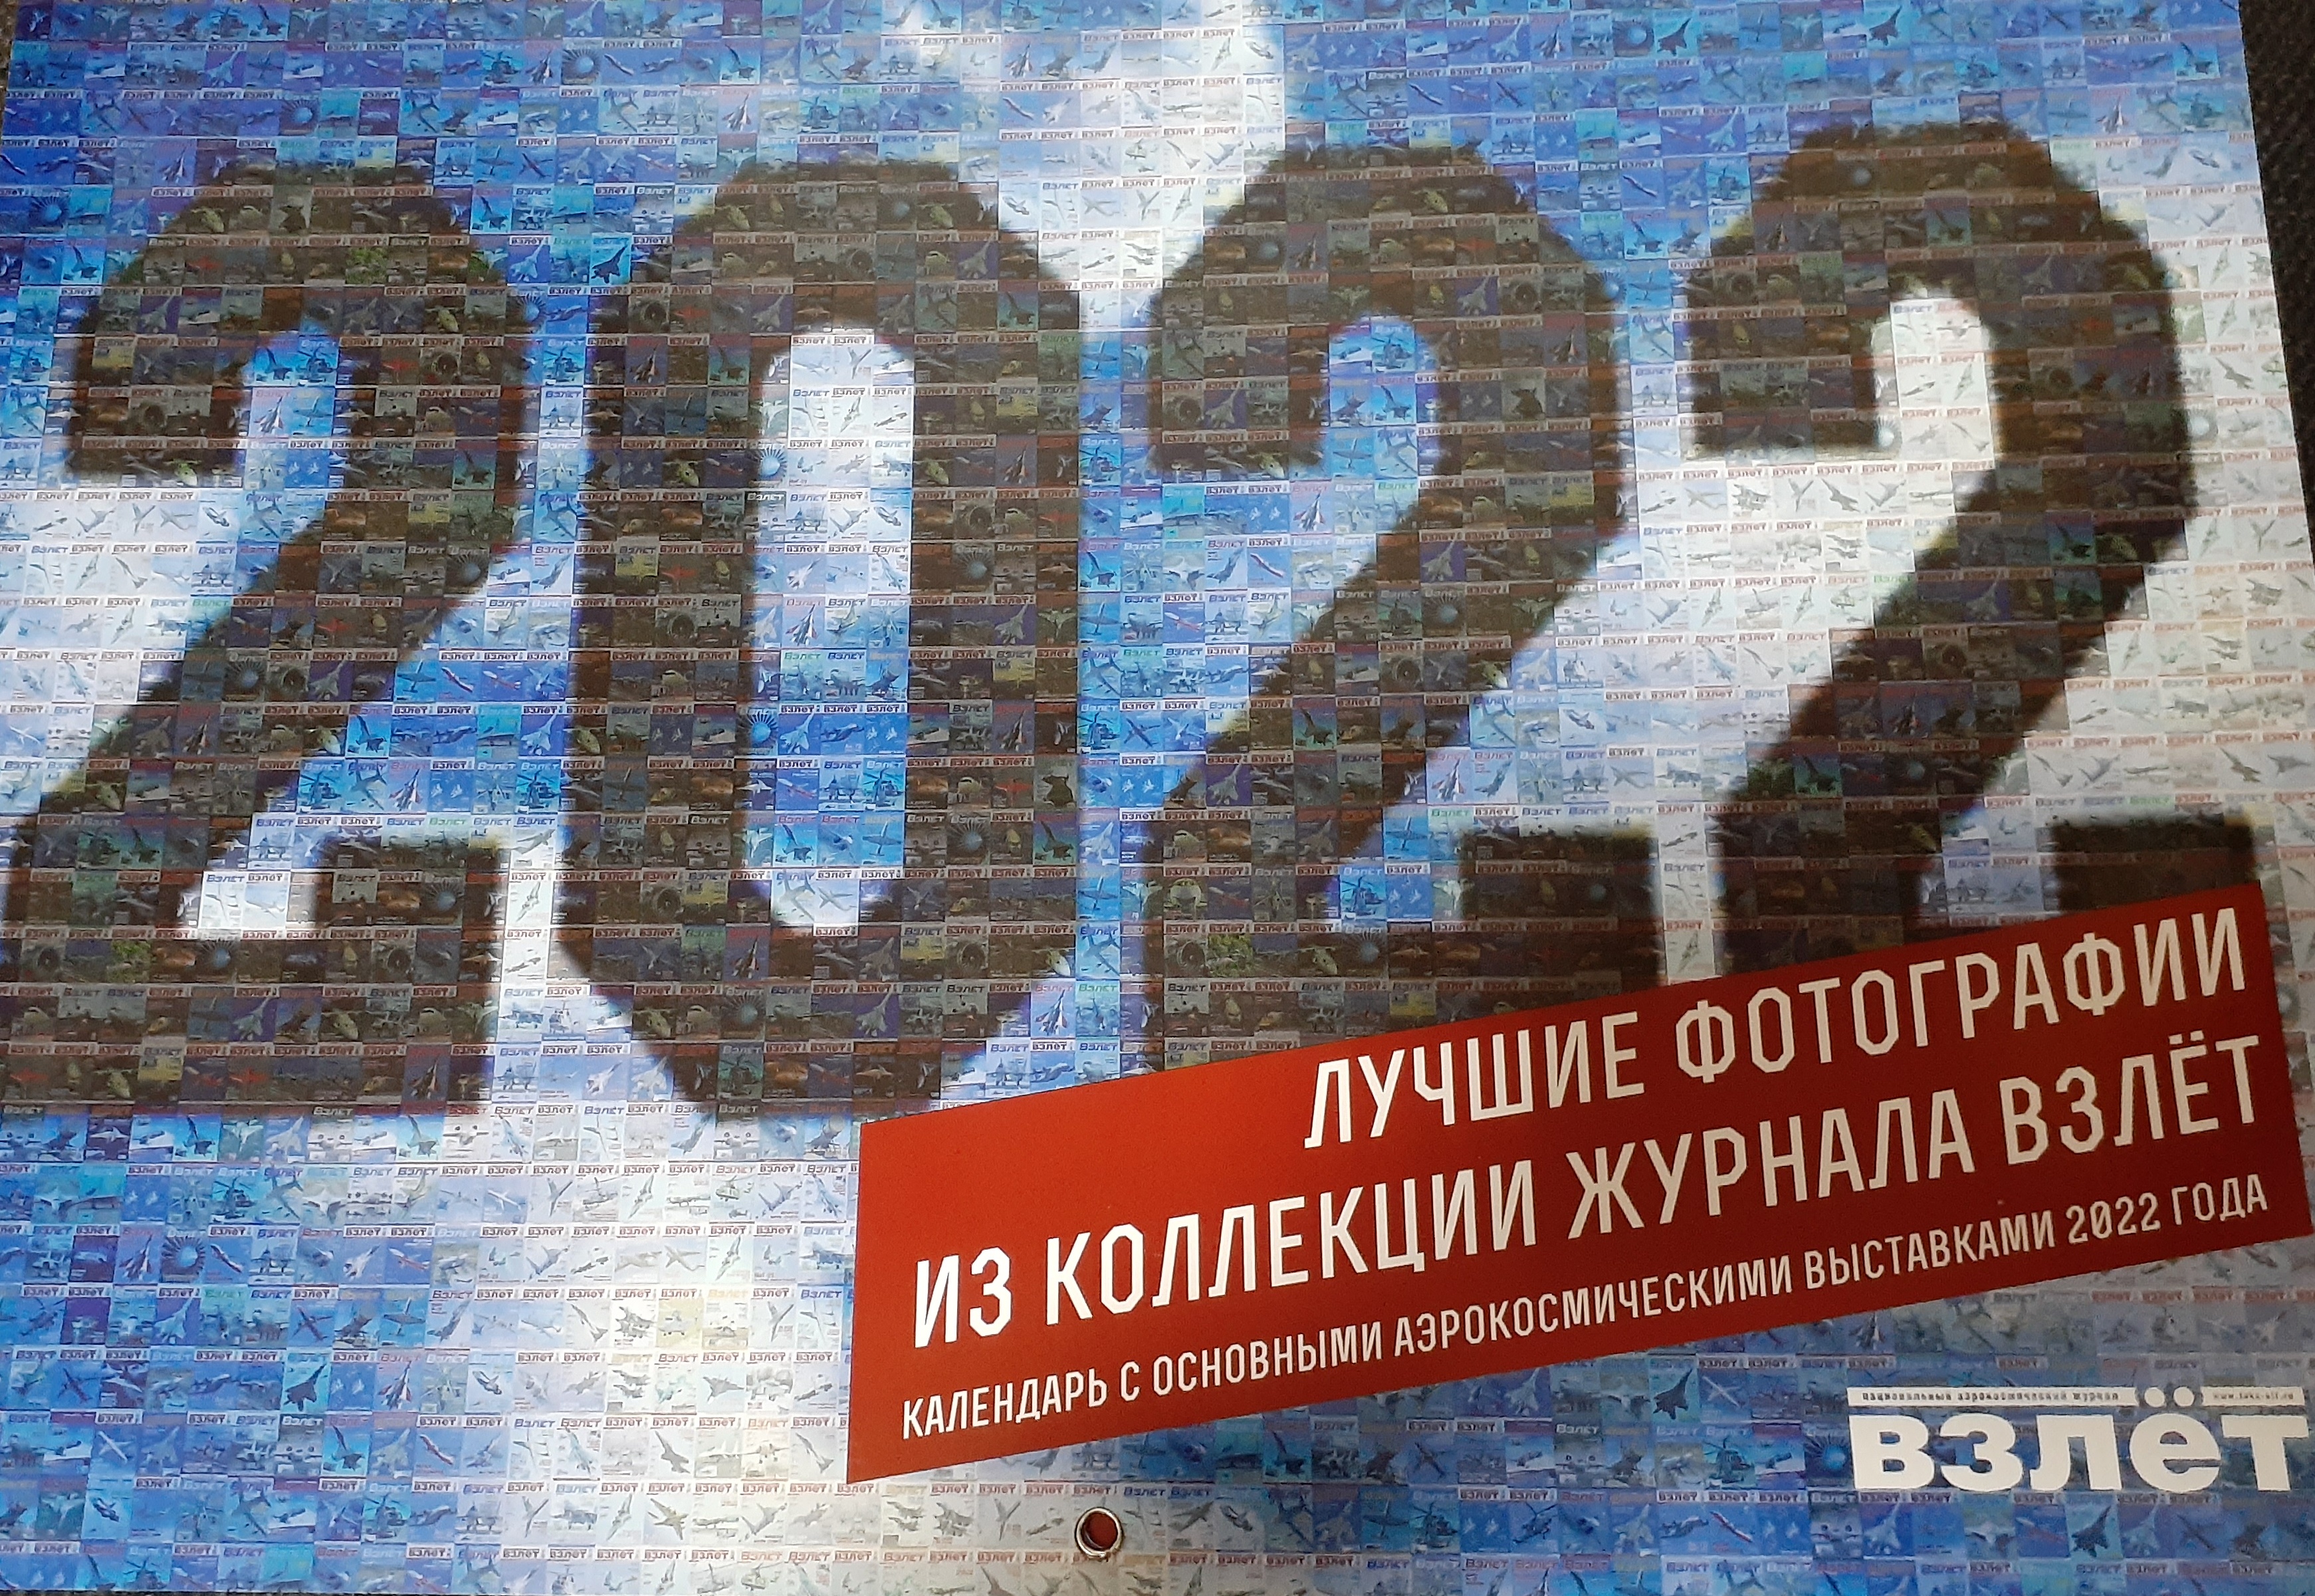 5142018  Календарь "Взлёт" на 2022 год